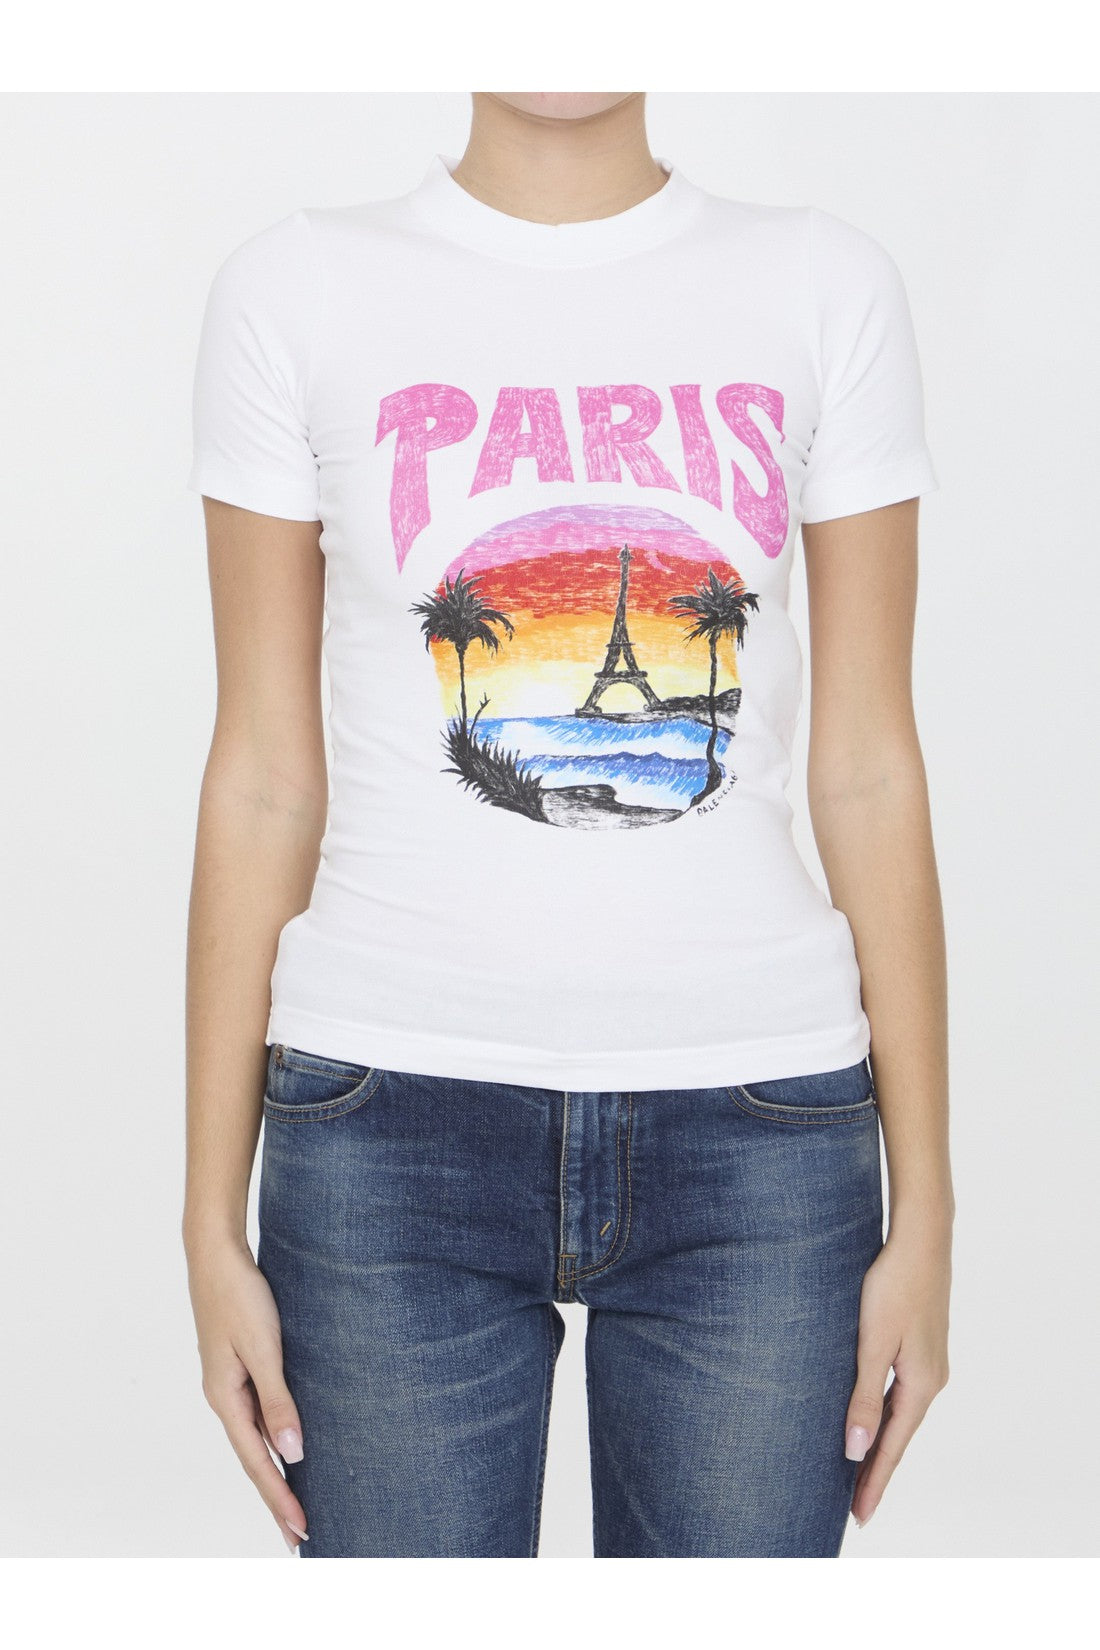 Paris Tropical t-shirt